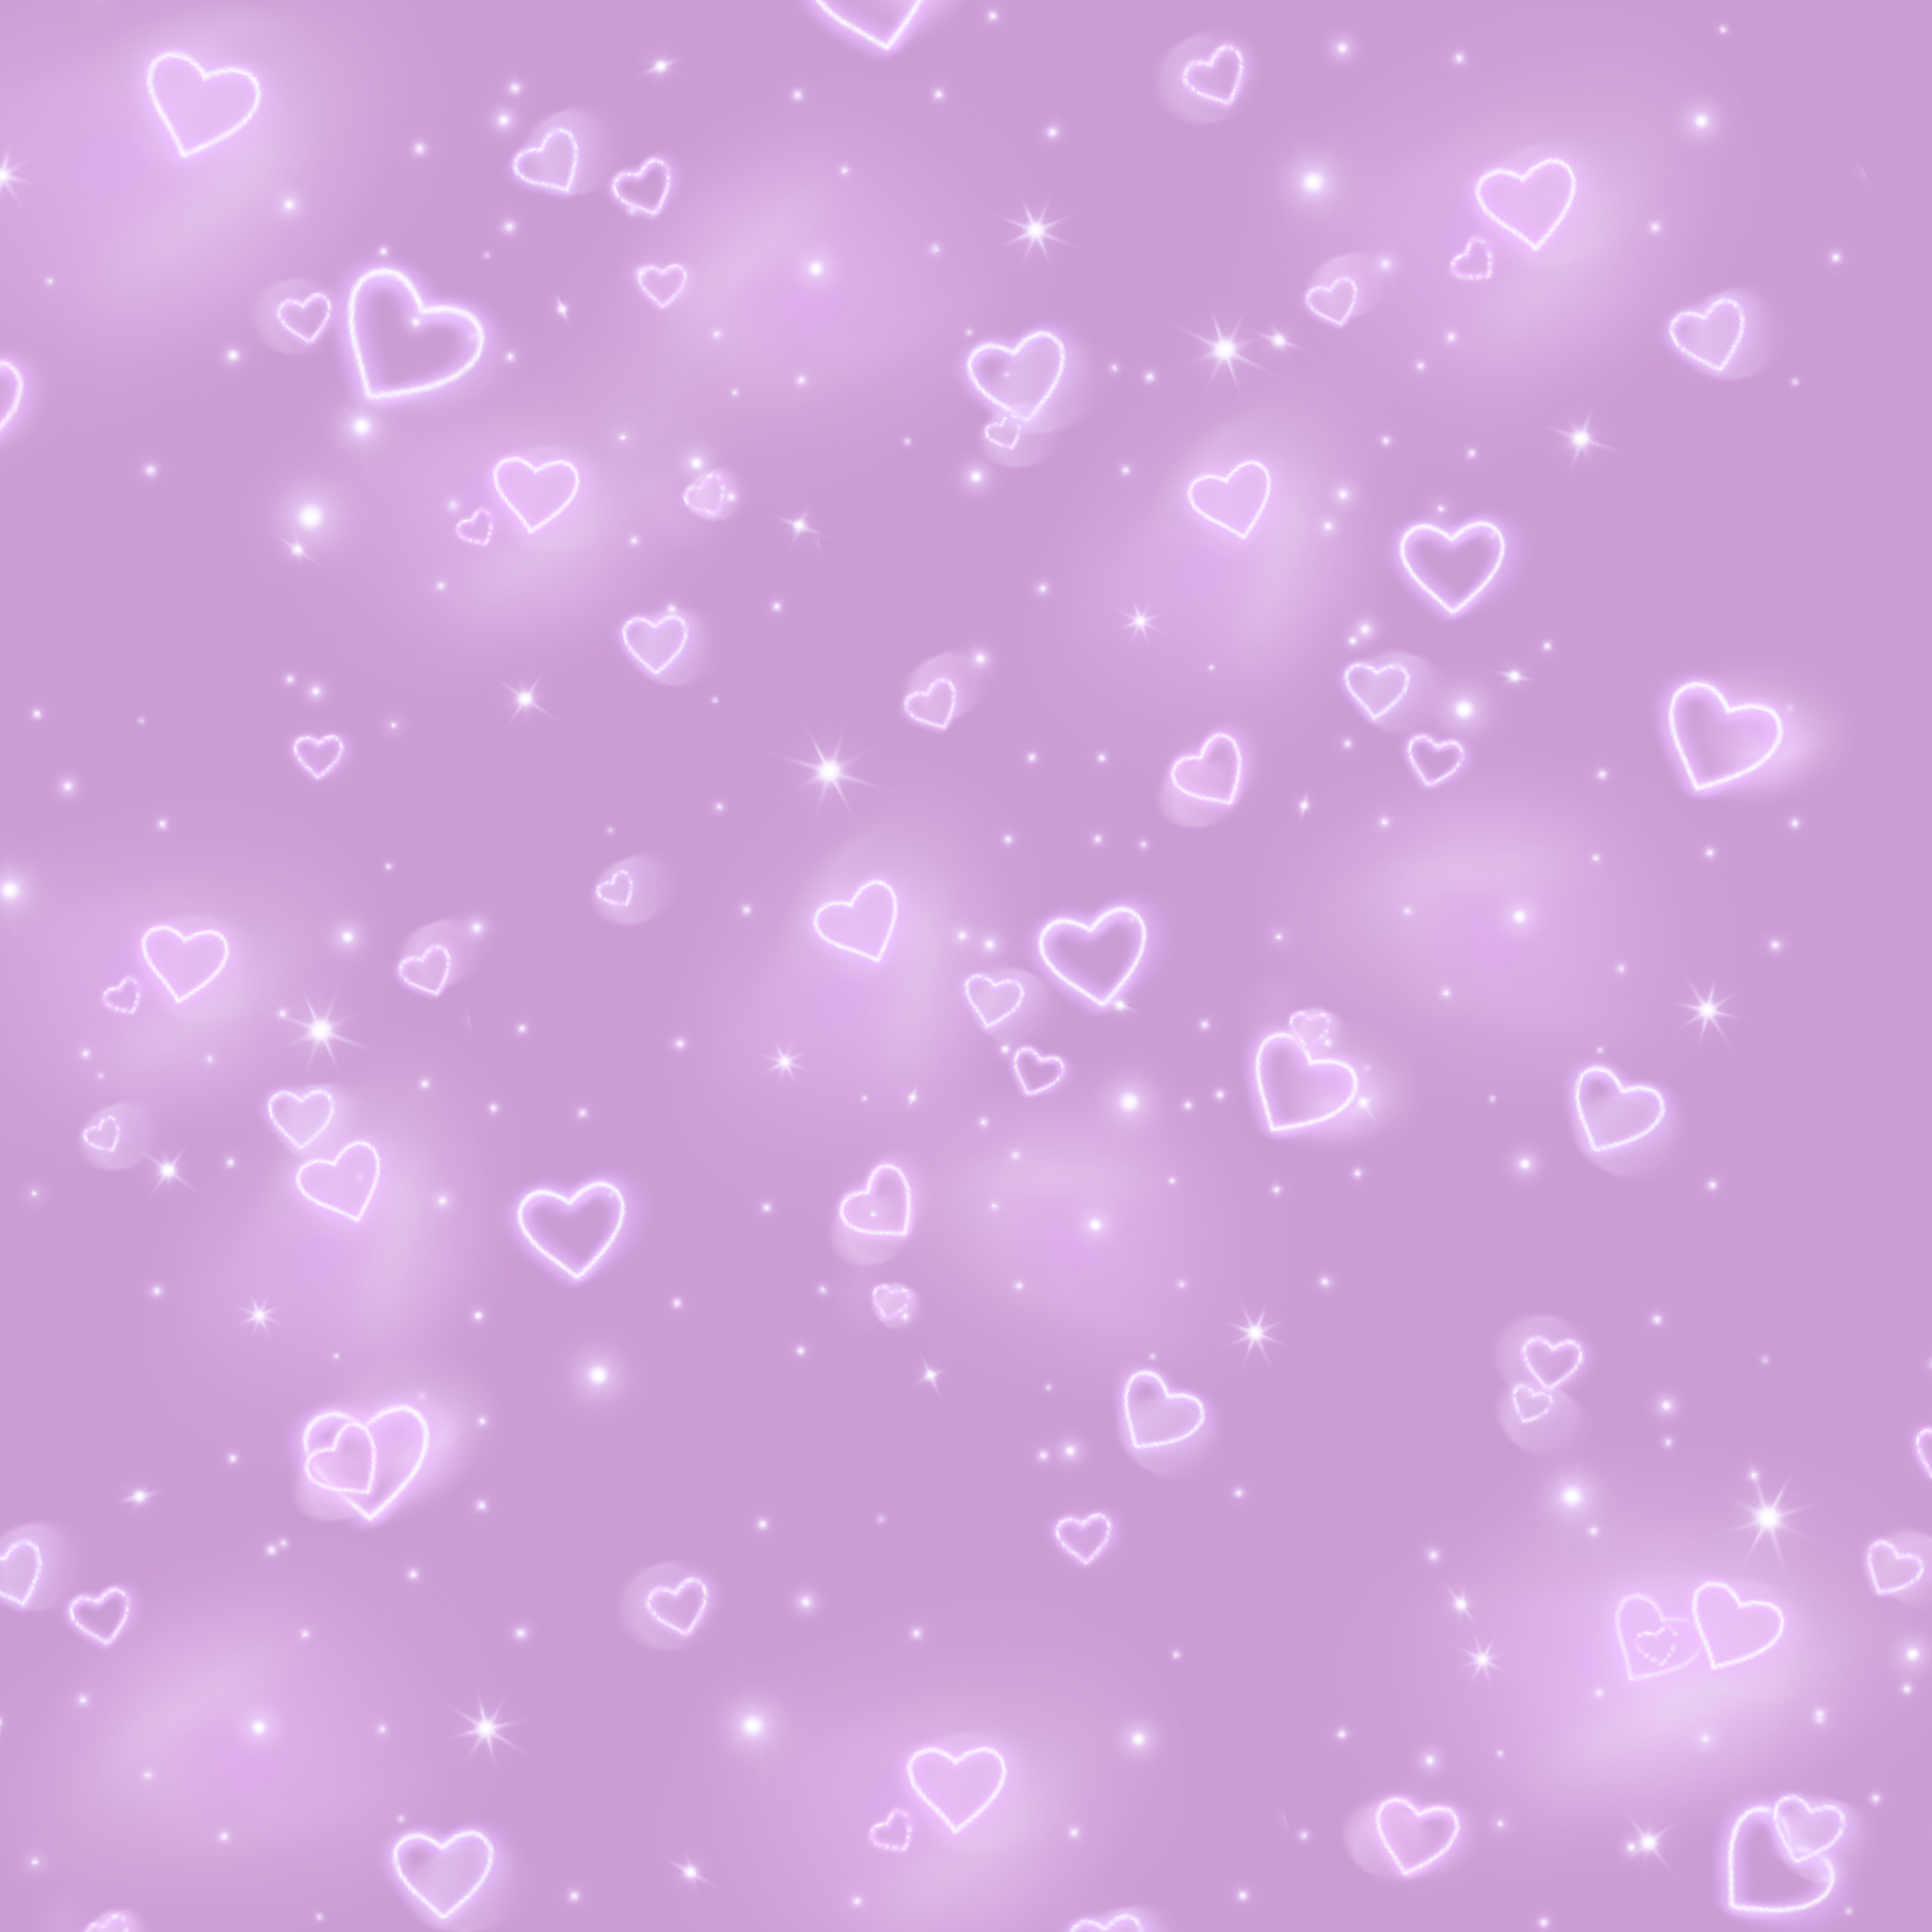 freetoedit background backgrounds pink image by @buffay39